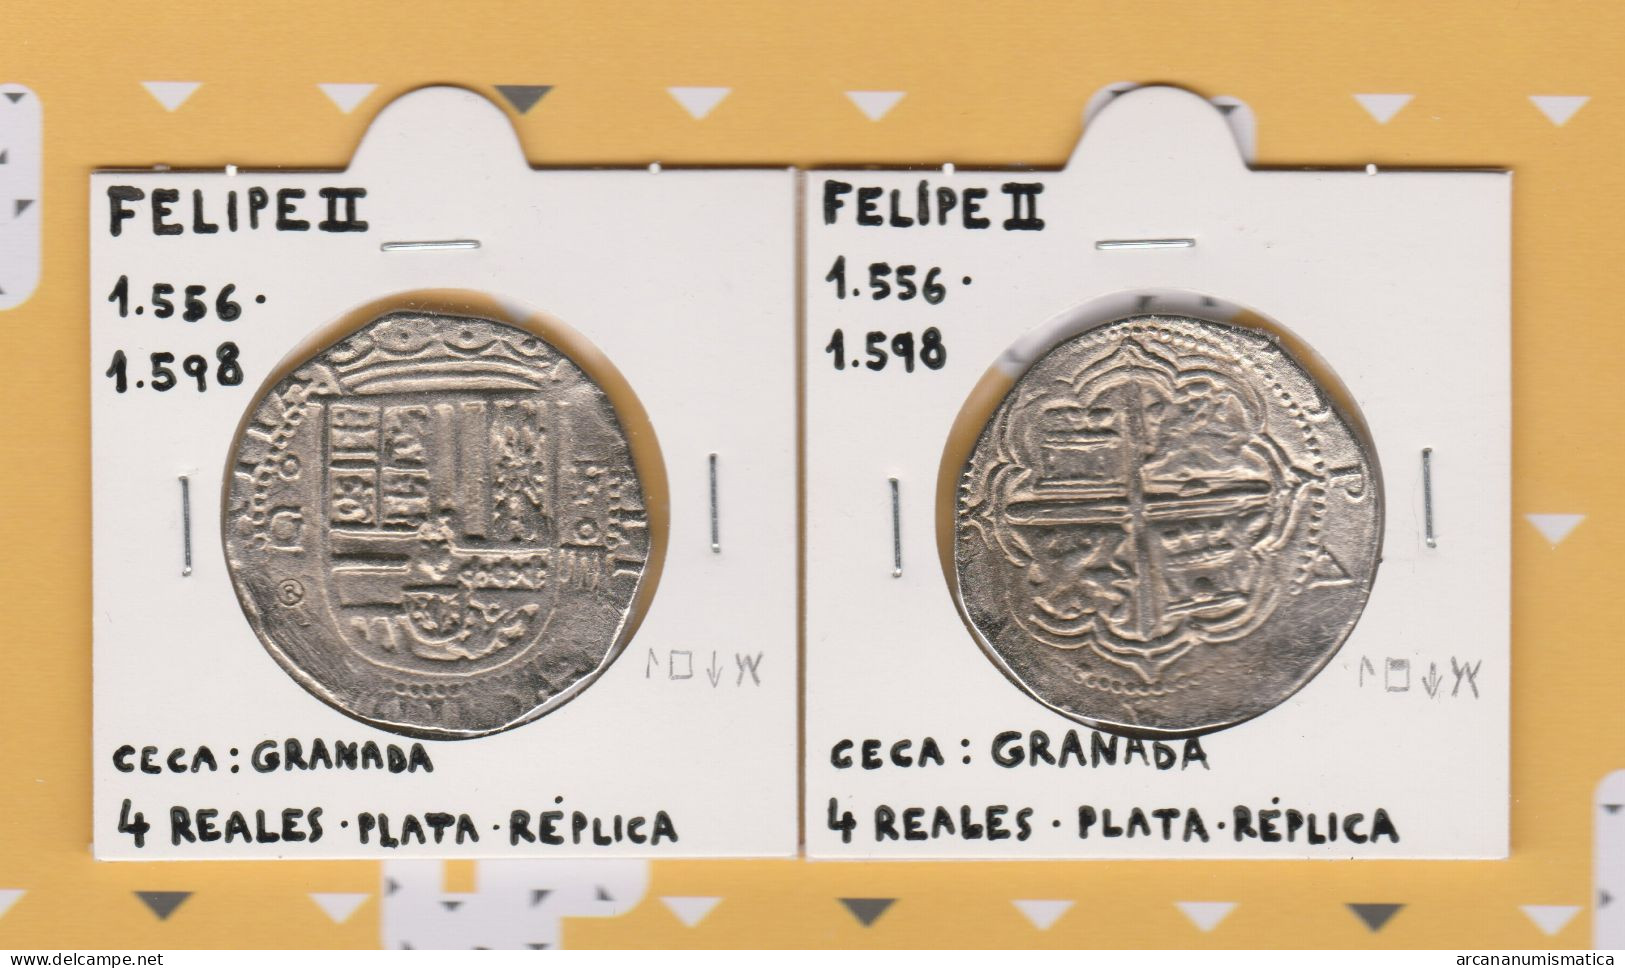 FELIPE II  1.556-1.598  4 REALES - PLATA Ceca: Granada  Réplica   T-DL-13.438 - Counterfeits